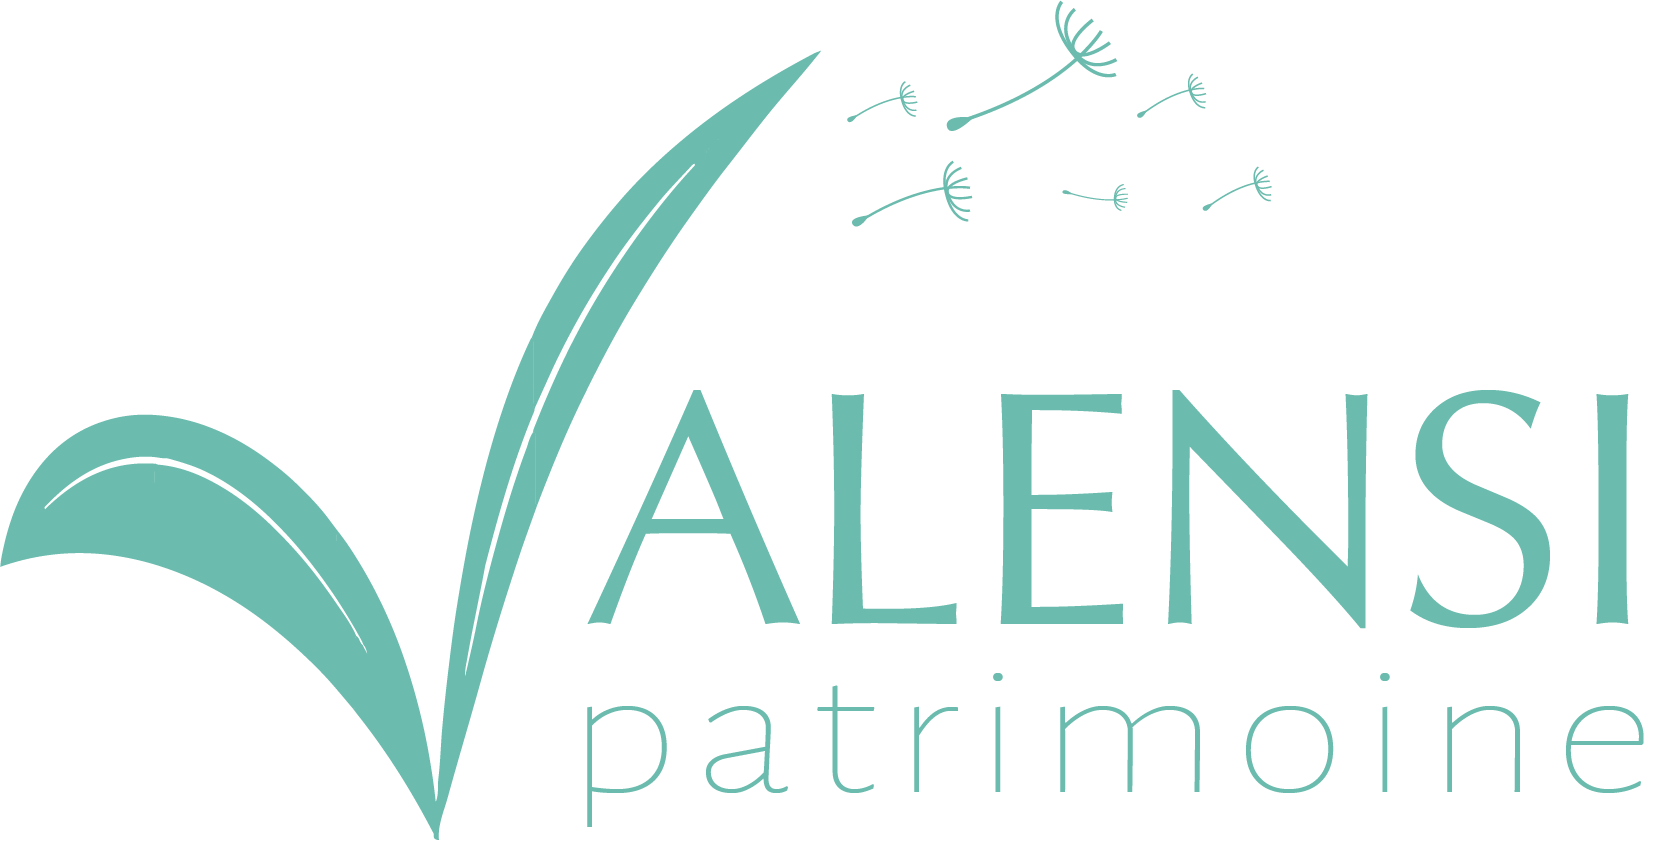 Le logo de Valensi patrimoine.